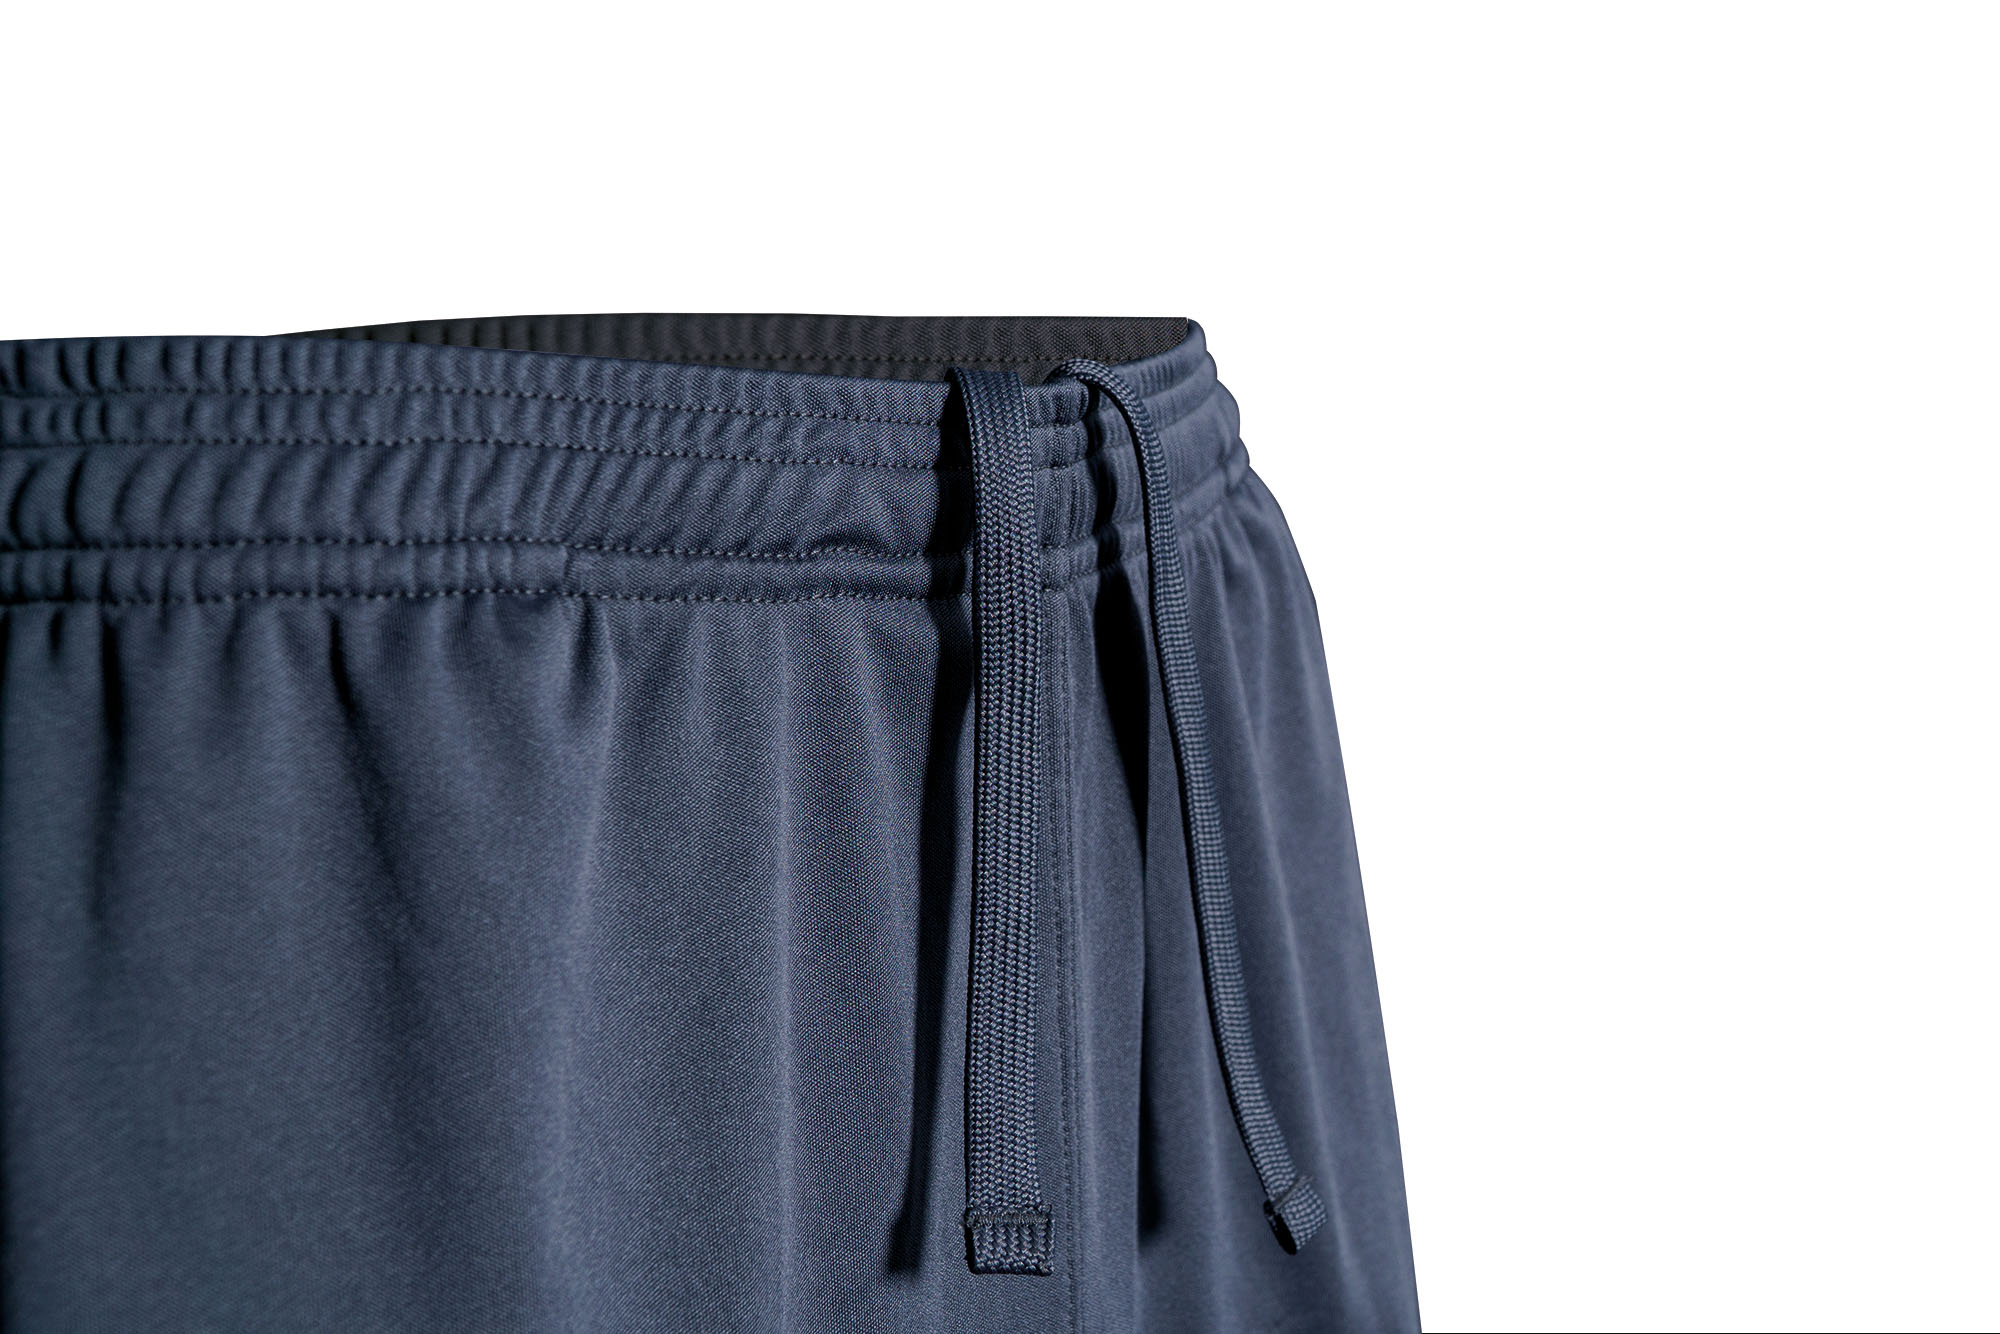 Spodnie RidgeMonkey APEarel CoolTech Shorts Grey